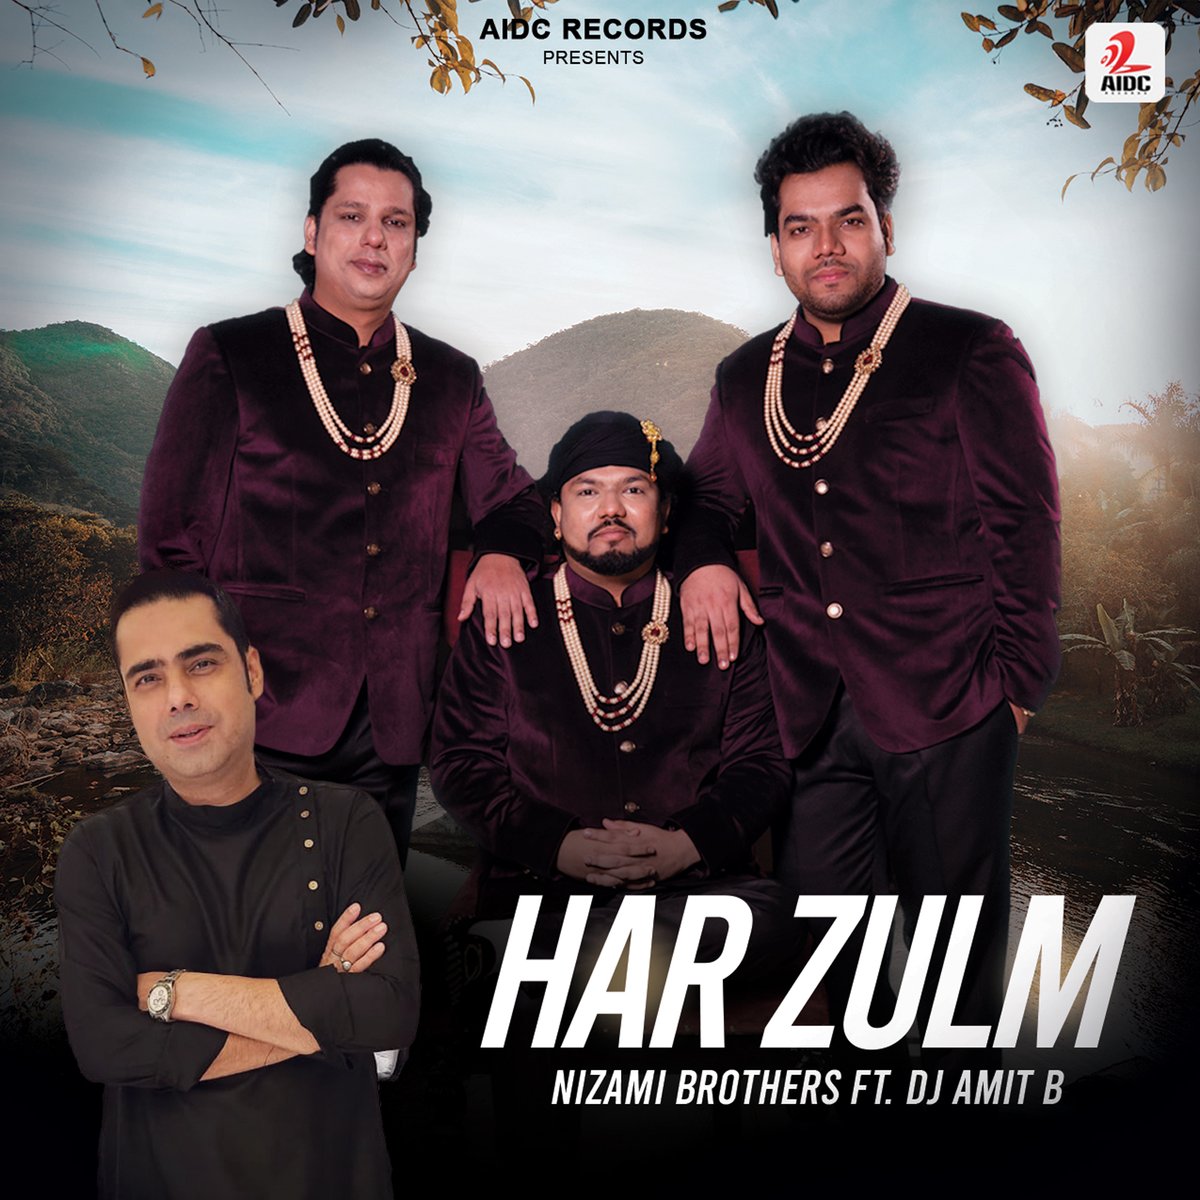 Har Zulm - Nizami Brothers Regd. Ft. Dj Amit B
Download: allindiandjsclub.in/hznba
#harzulm #nizamibrothers #djamitb #music